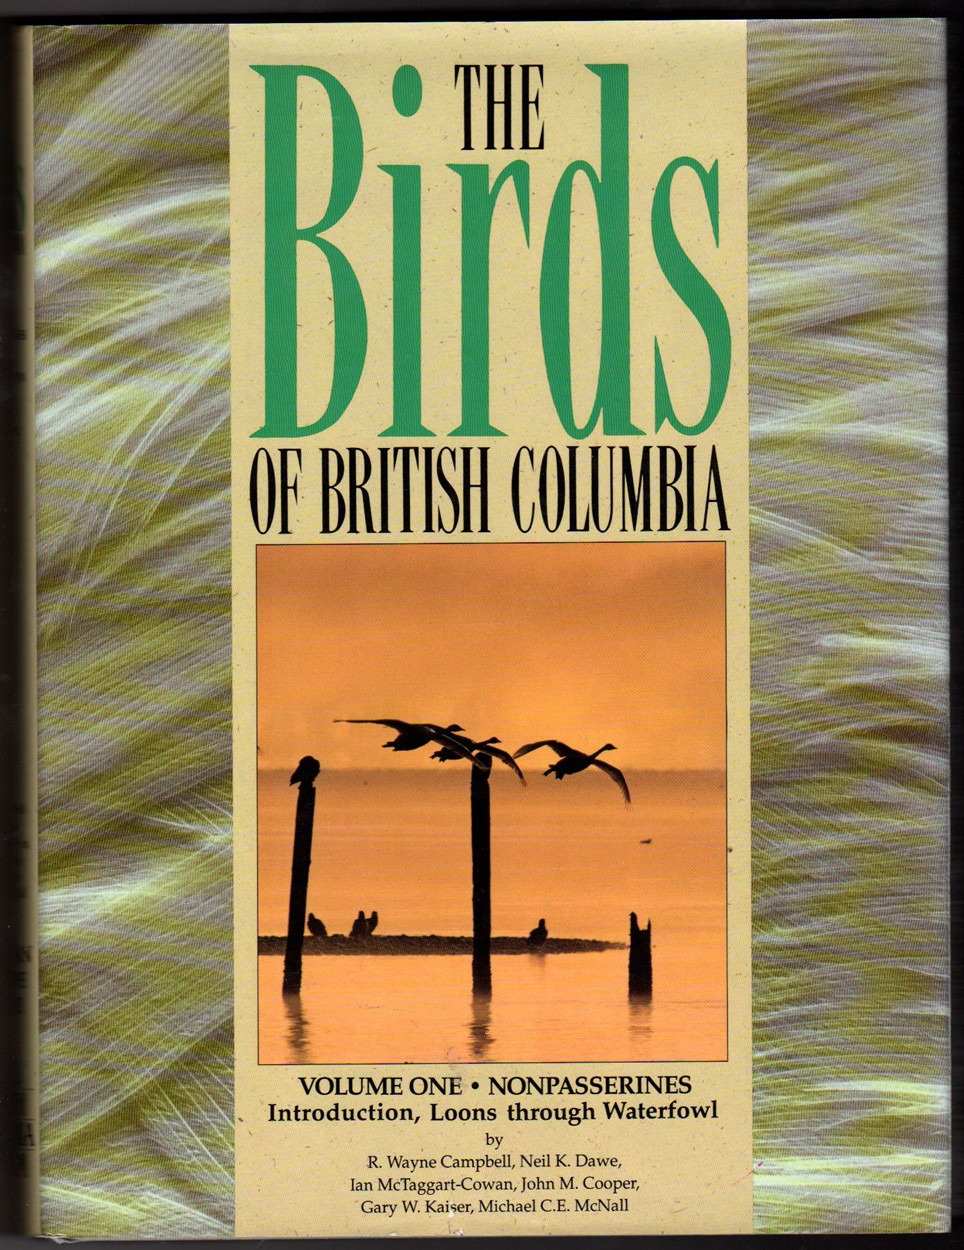 CAMPBELL, R. WAYNE; NEIL K. DAWE; IAN MCTAGGART-COWAN; JOHN M. COOPER; GARY W. KAISER; MICHAEL C.E. MCNALL - The Birds of British Columbia, Vol. 1 Nonpasserines